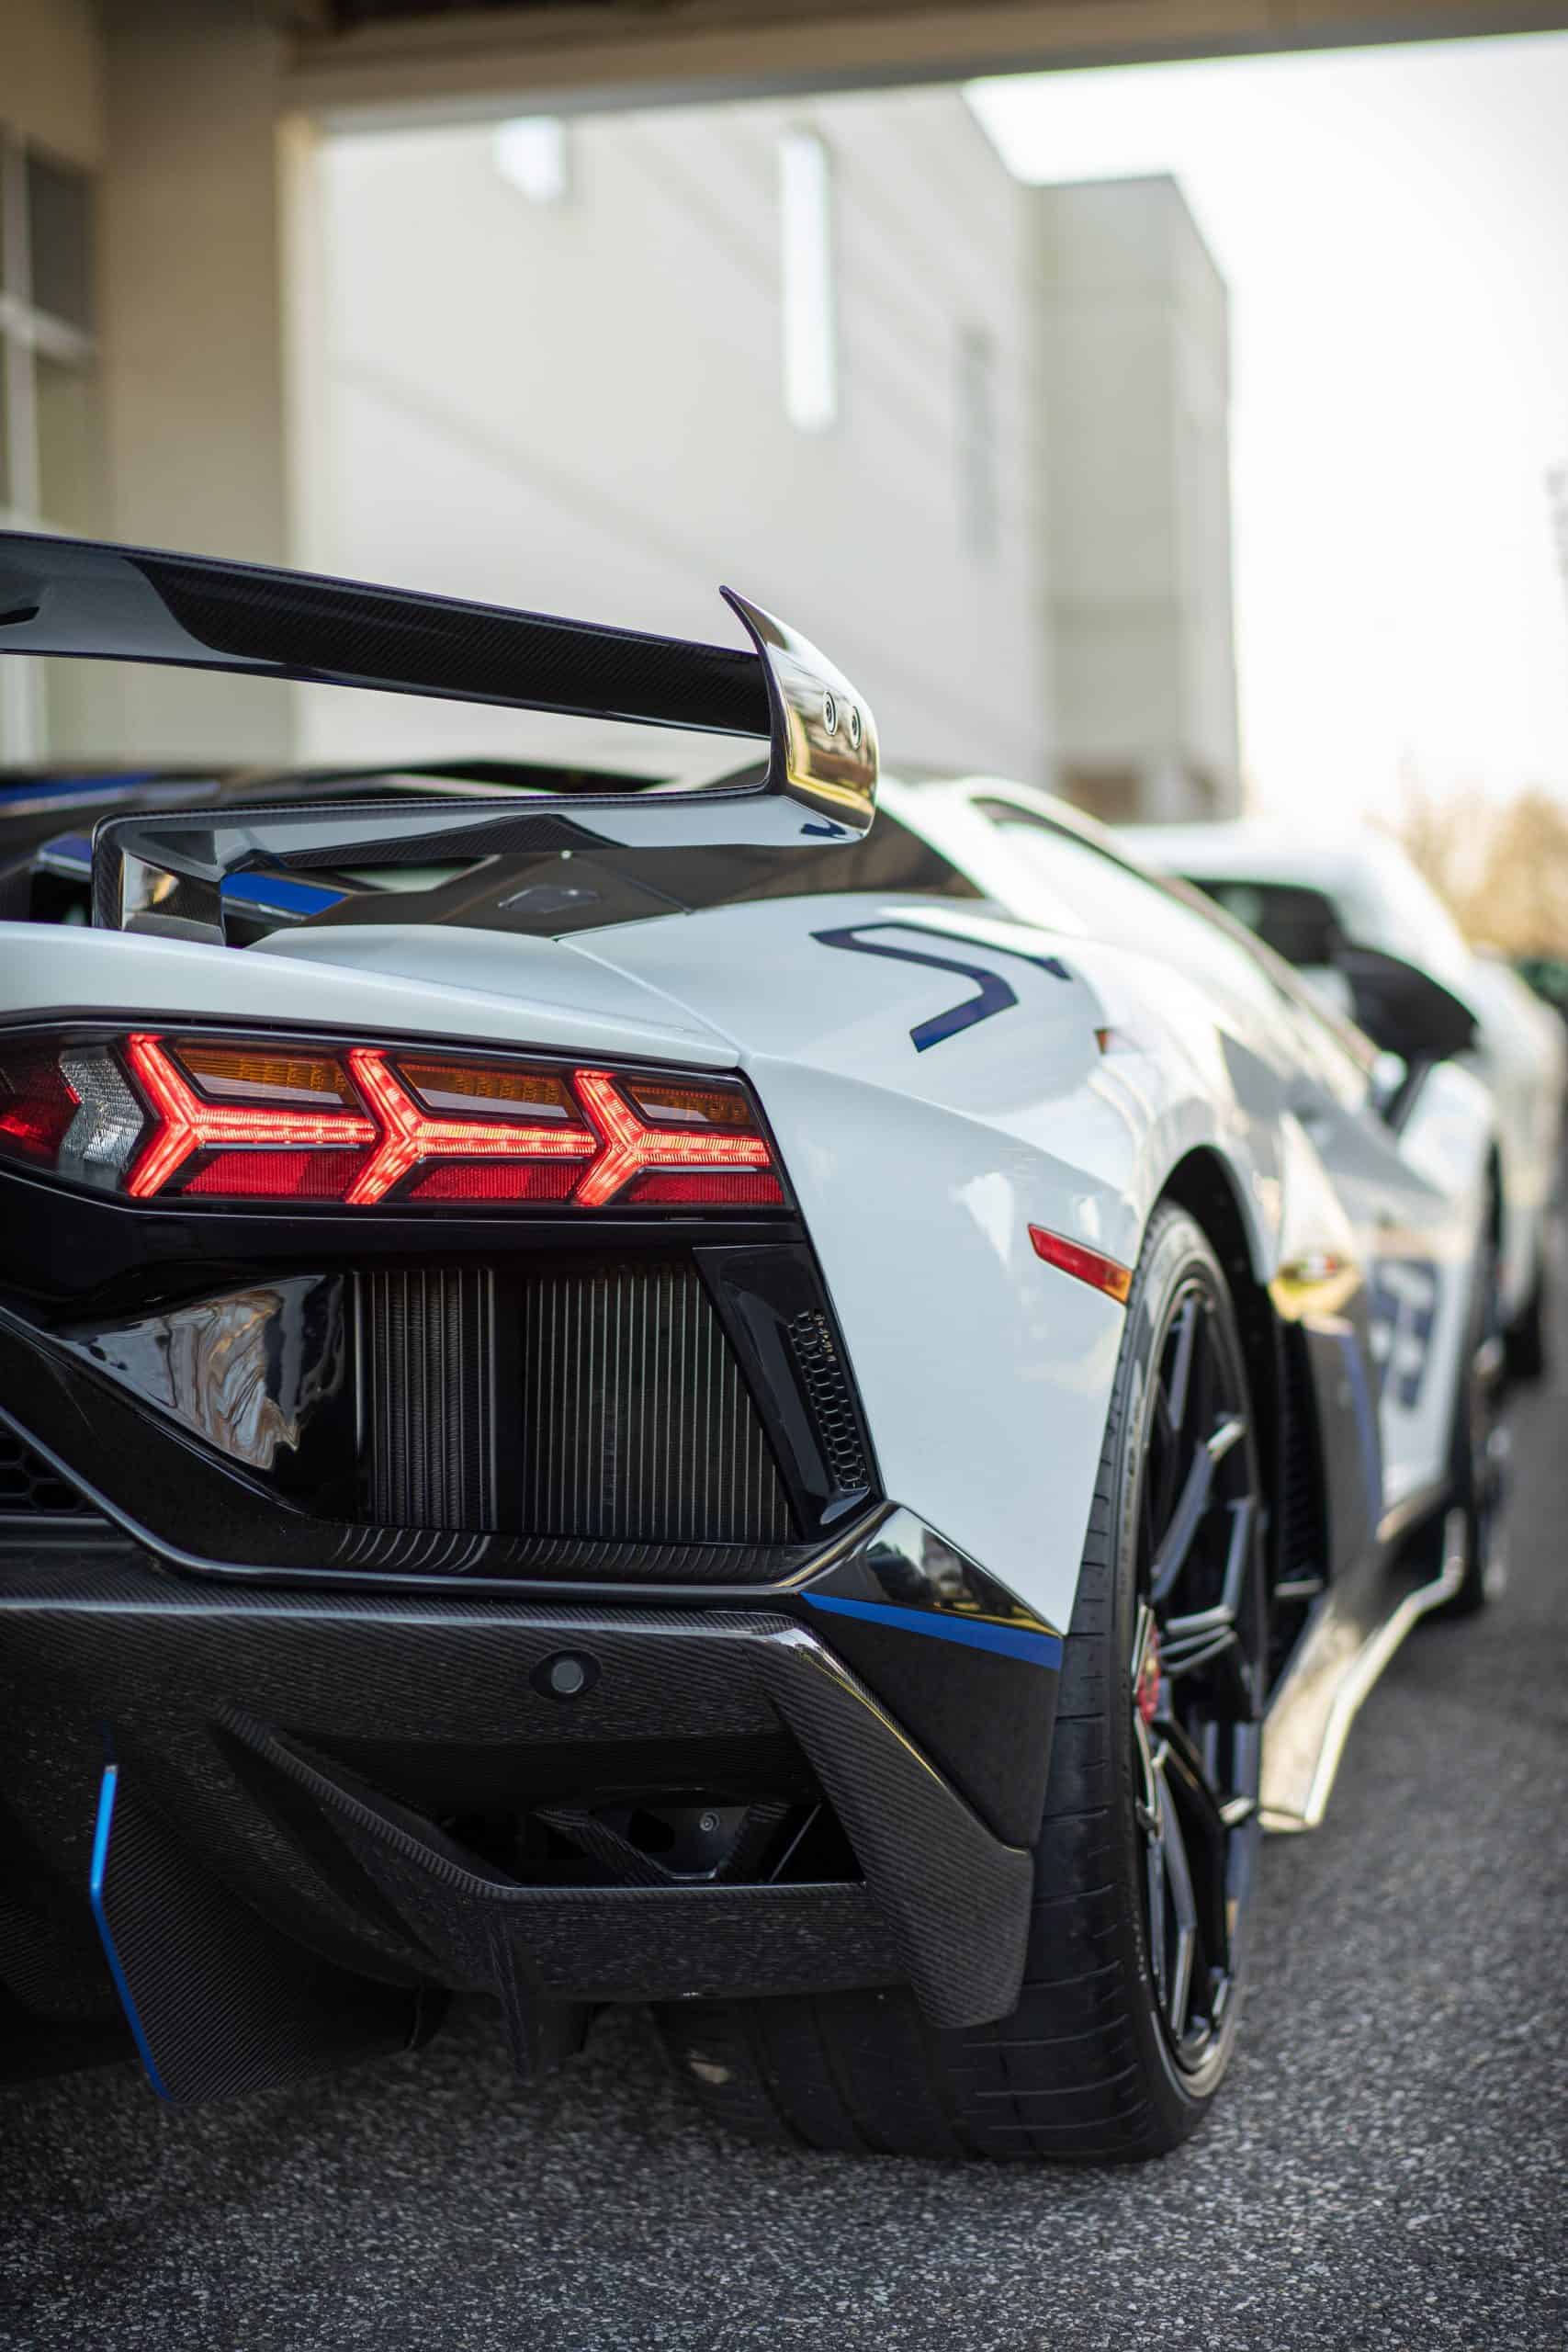 Lamborghini sports cars